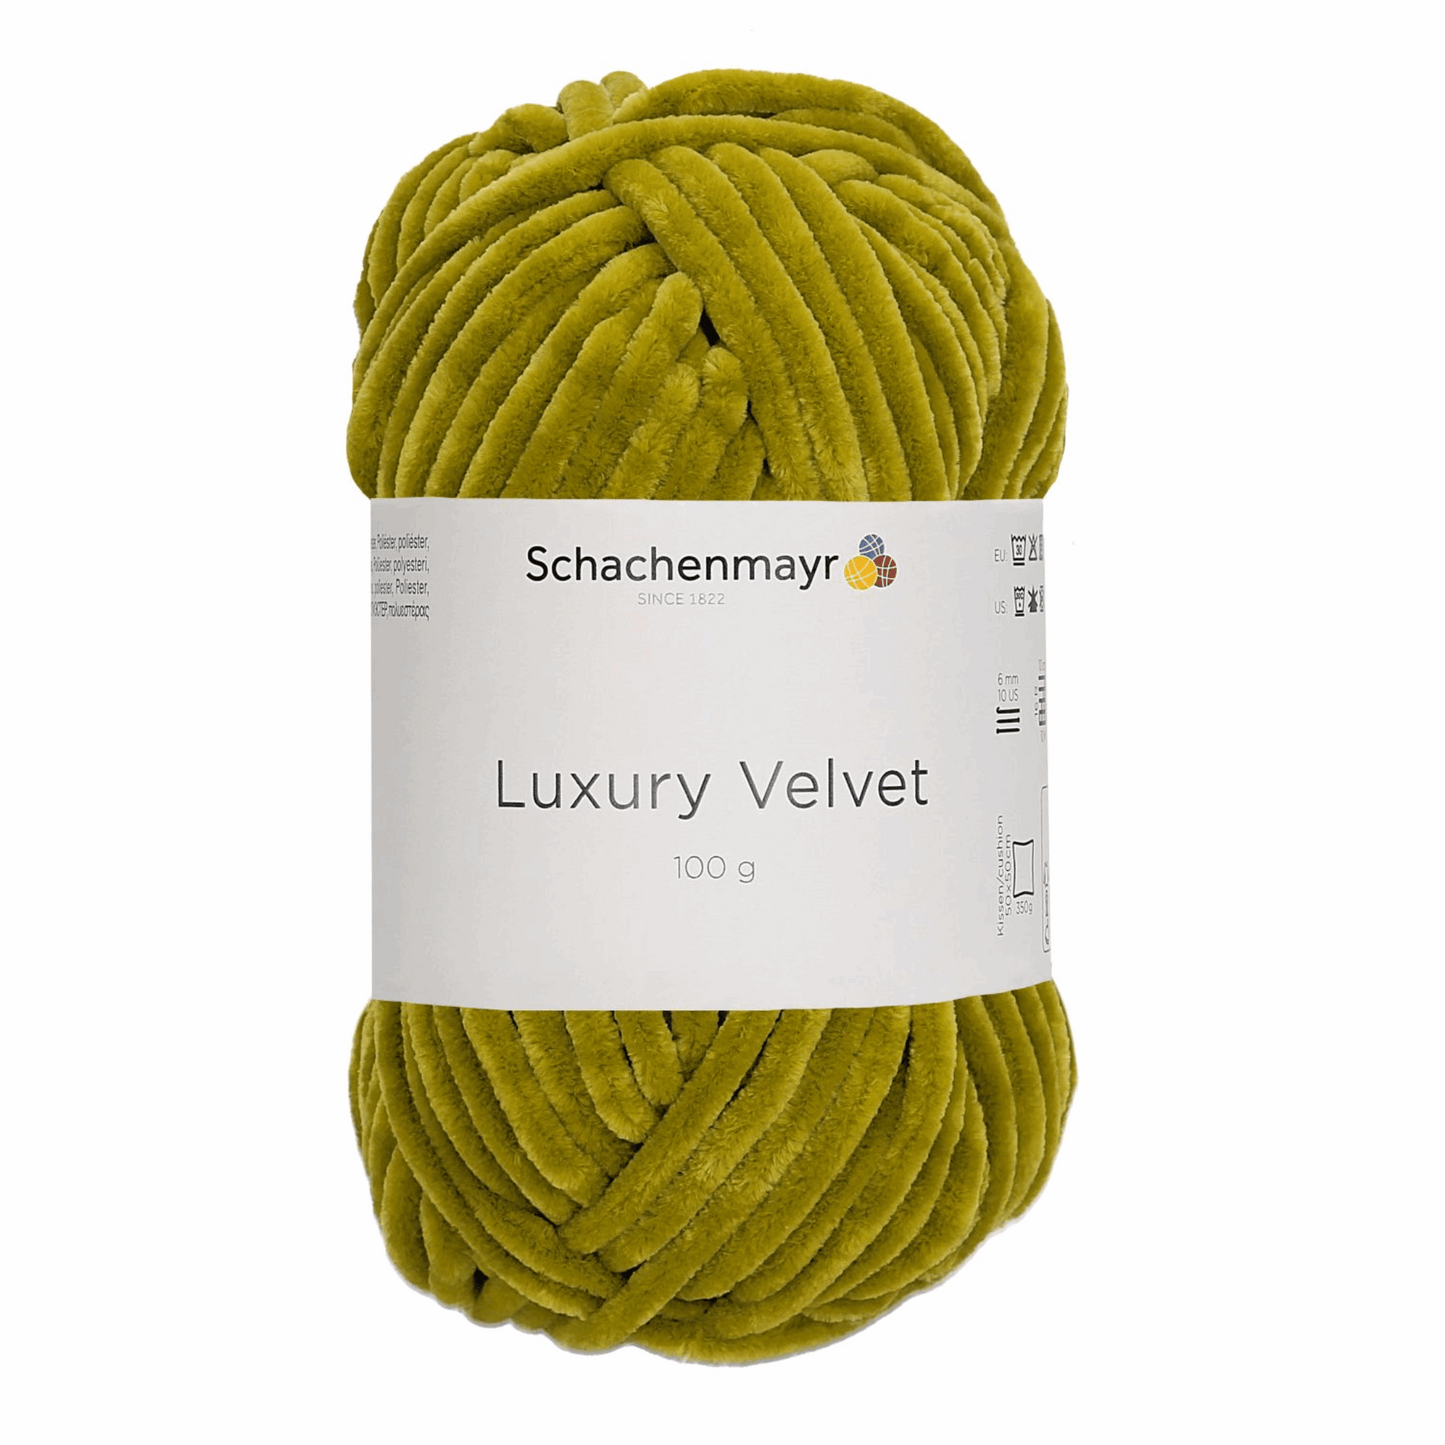 Schachenmayr Luxury Velvet 100g, 90592, color lime 72